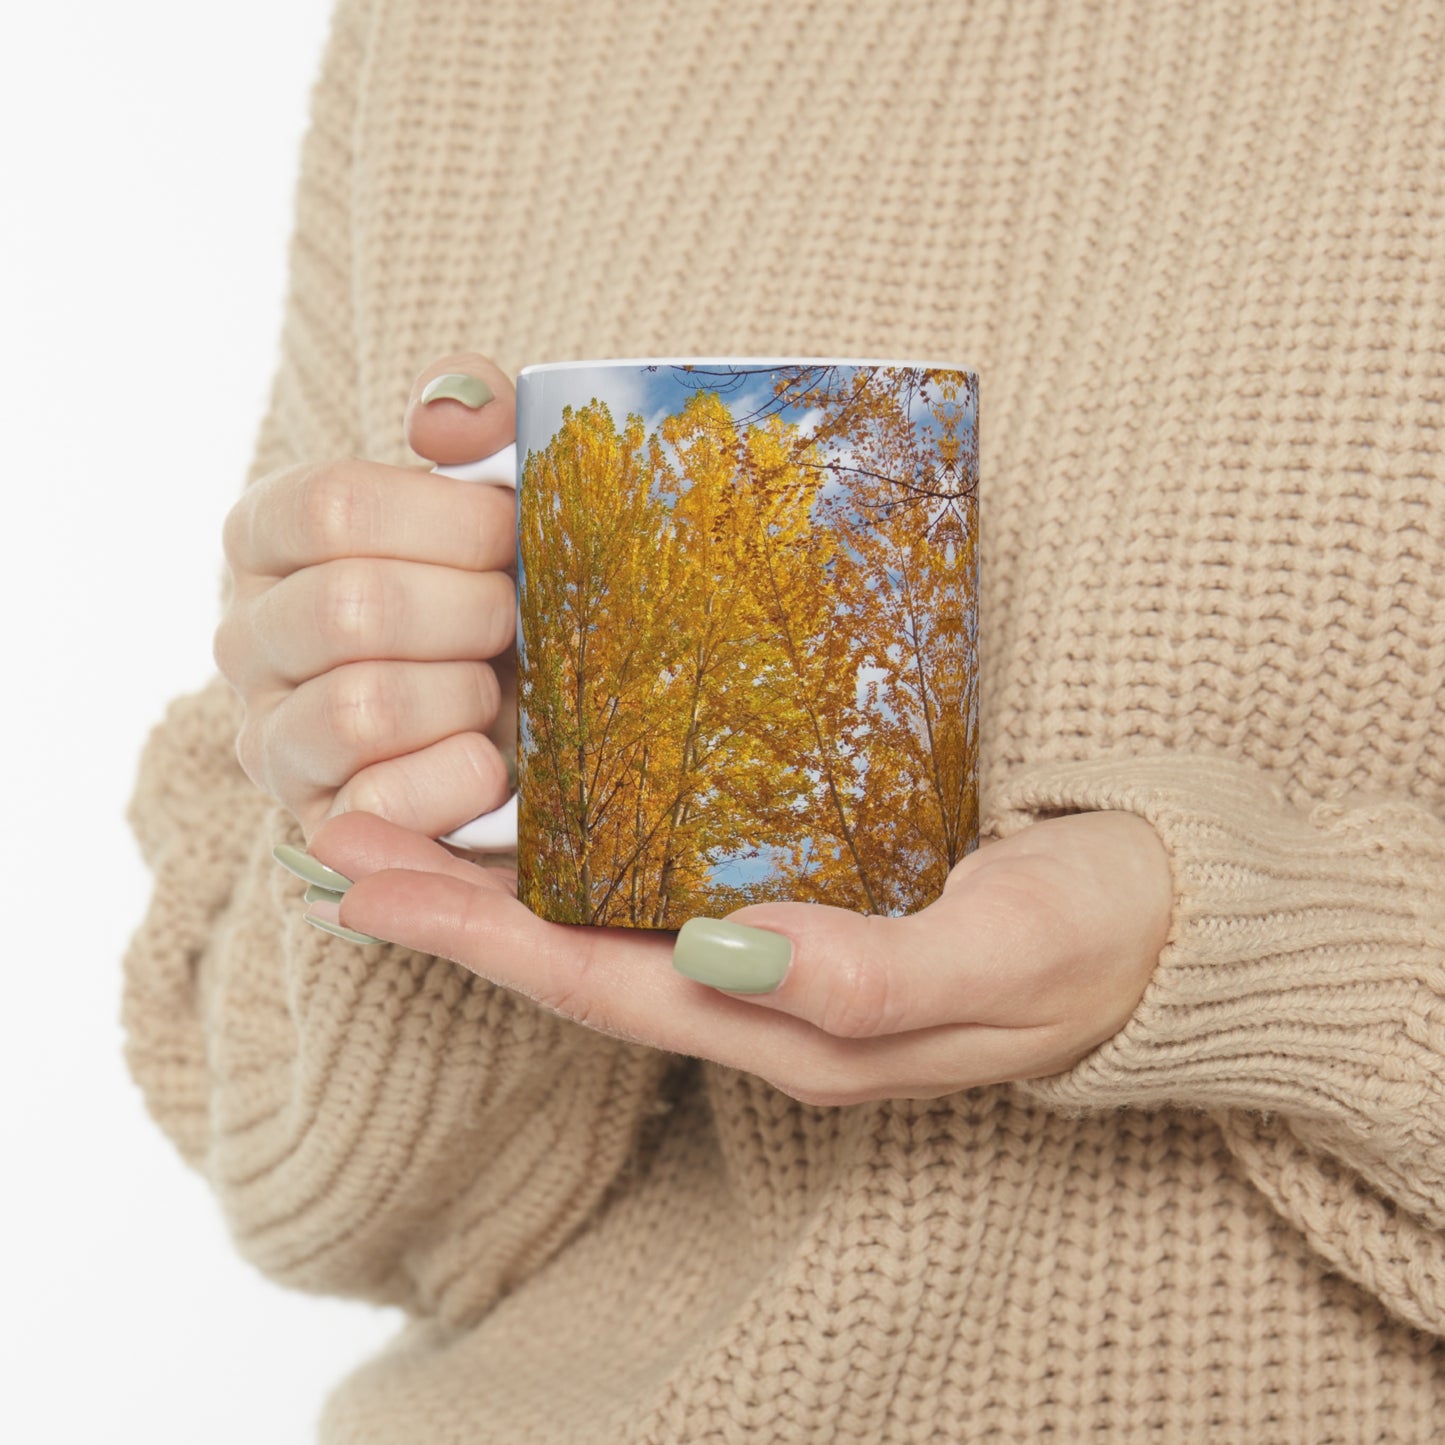 Autumn Gold Ceramic Mug 11oz